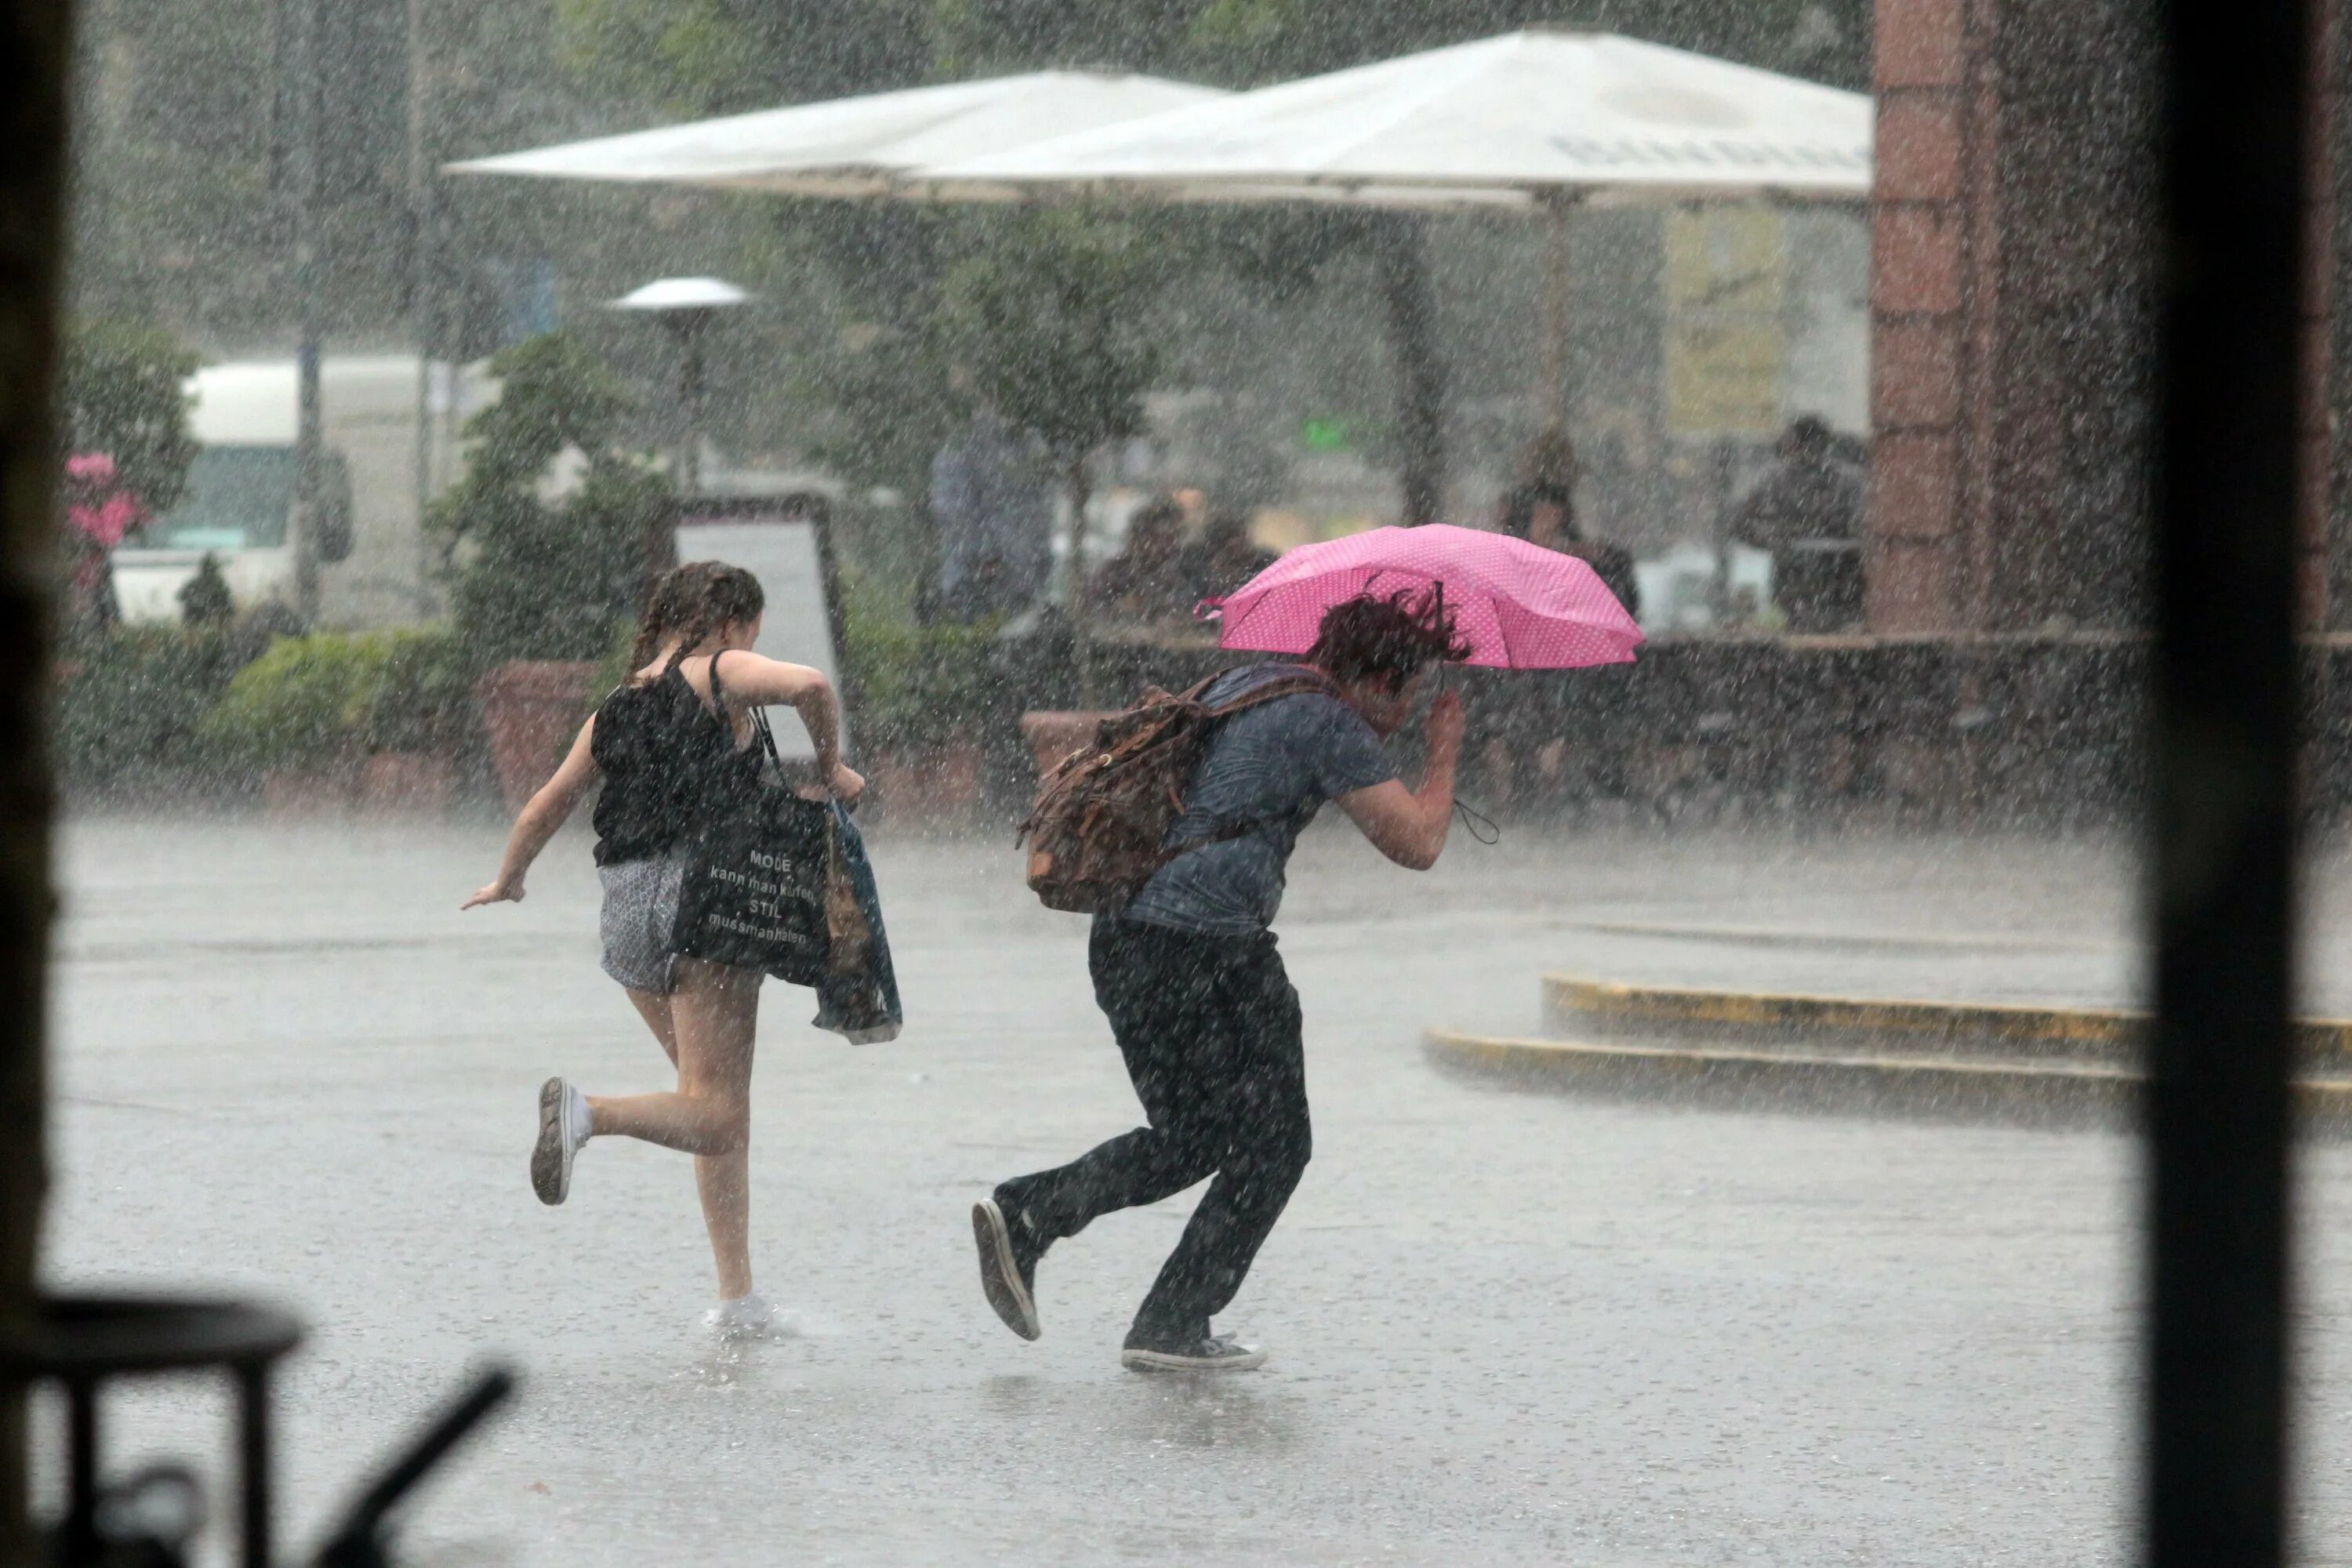 Did she bring her Umbrella? It Rains again. It it Rain heavily you get wet.